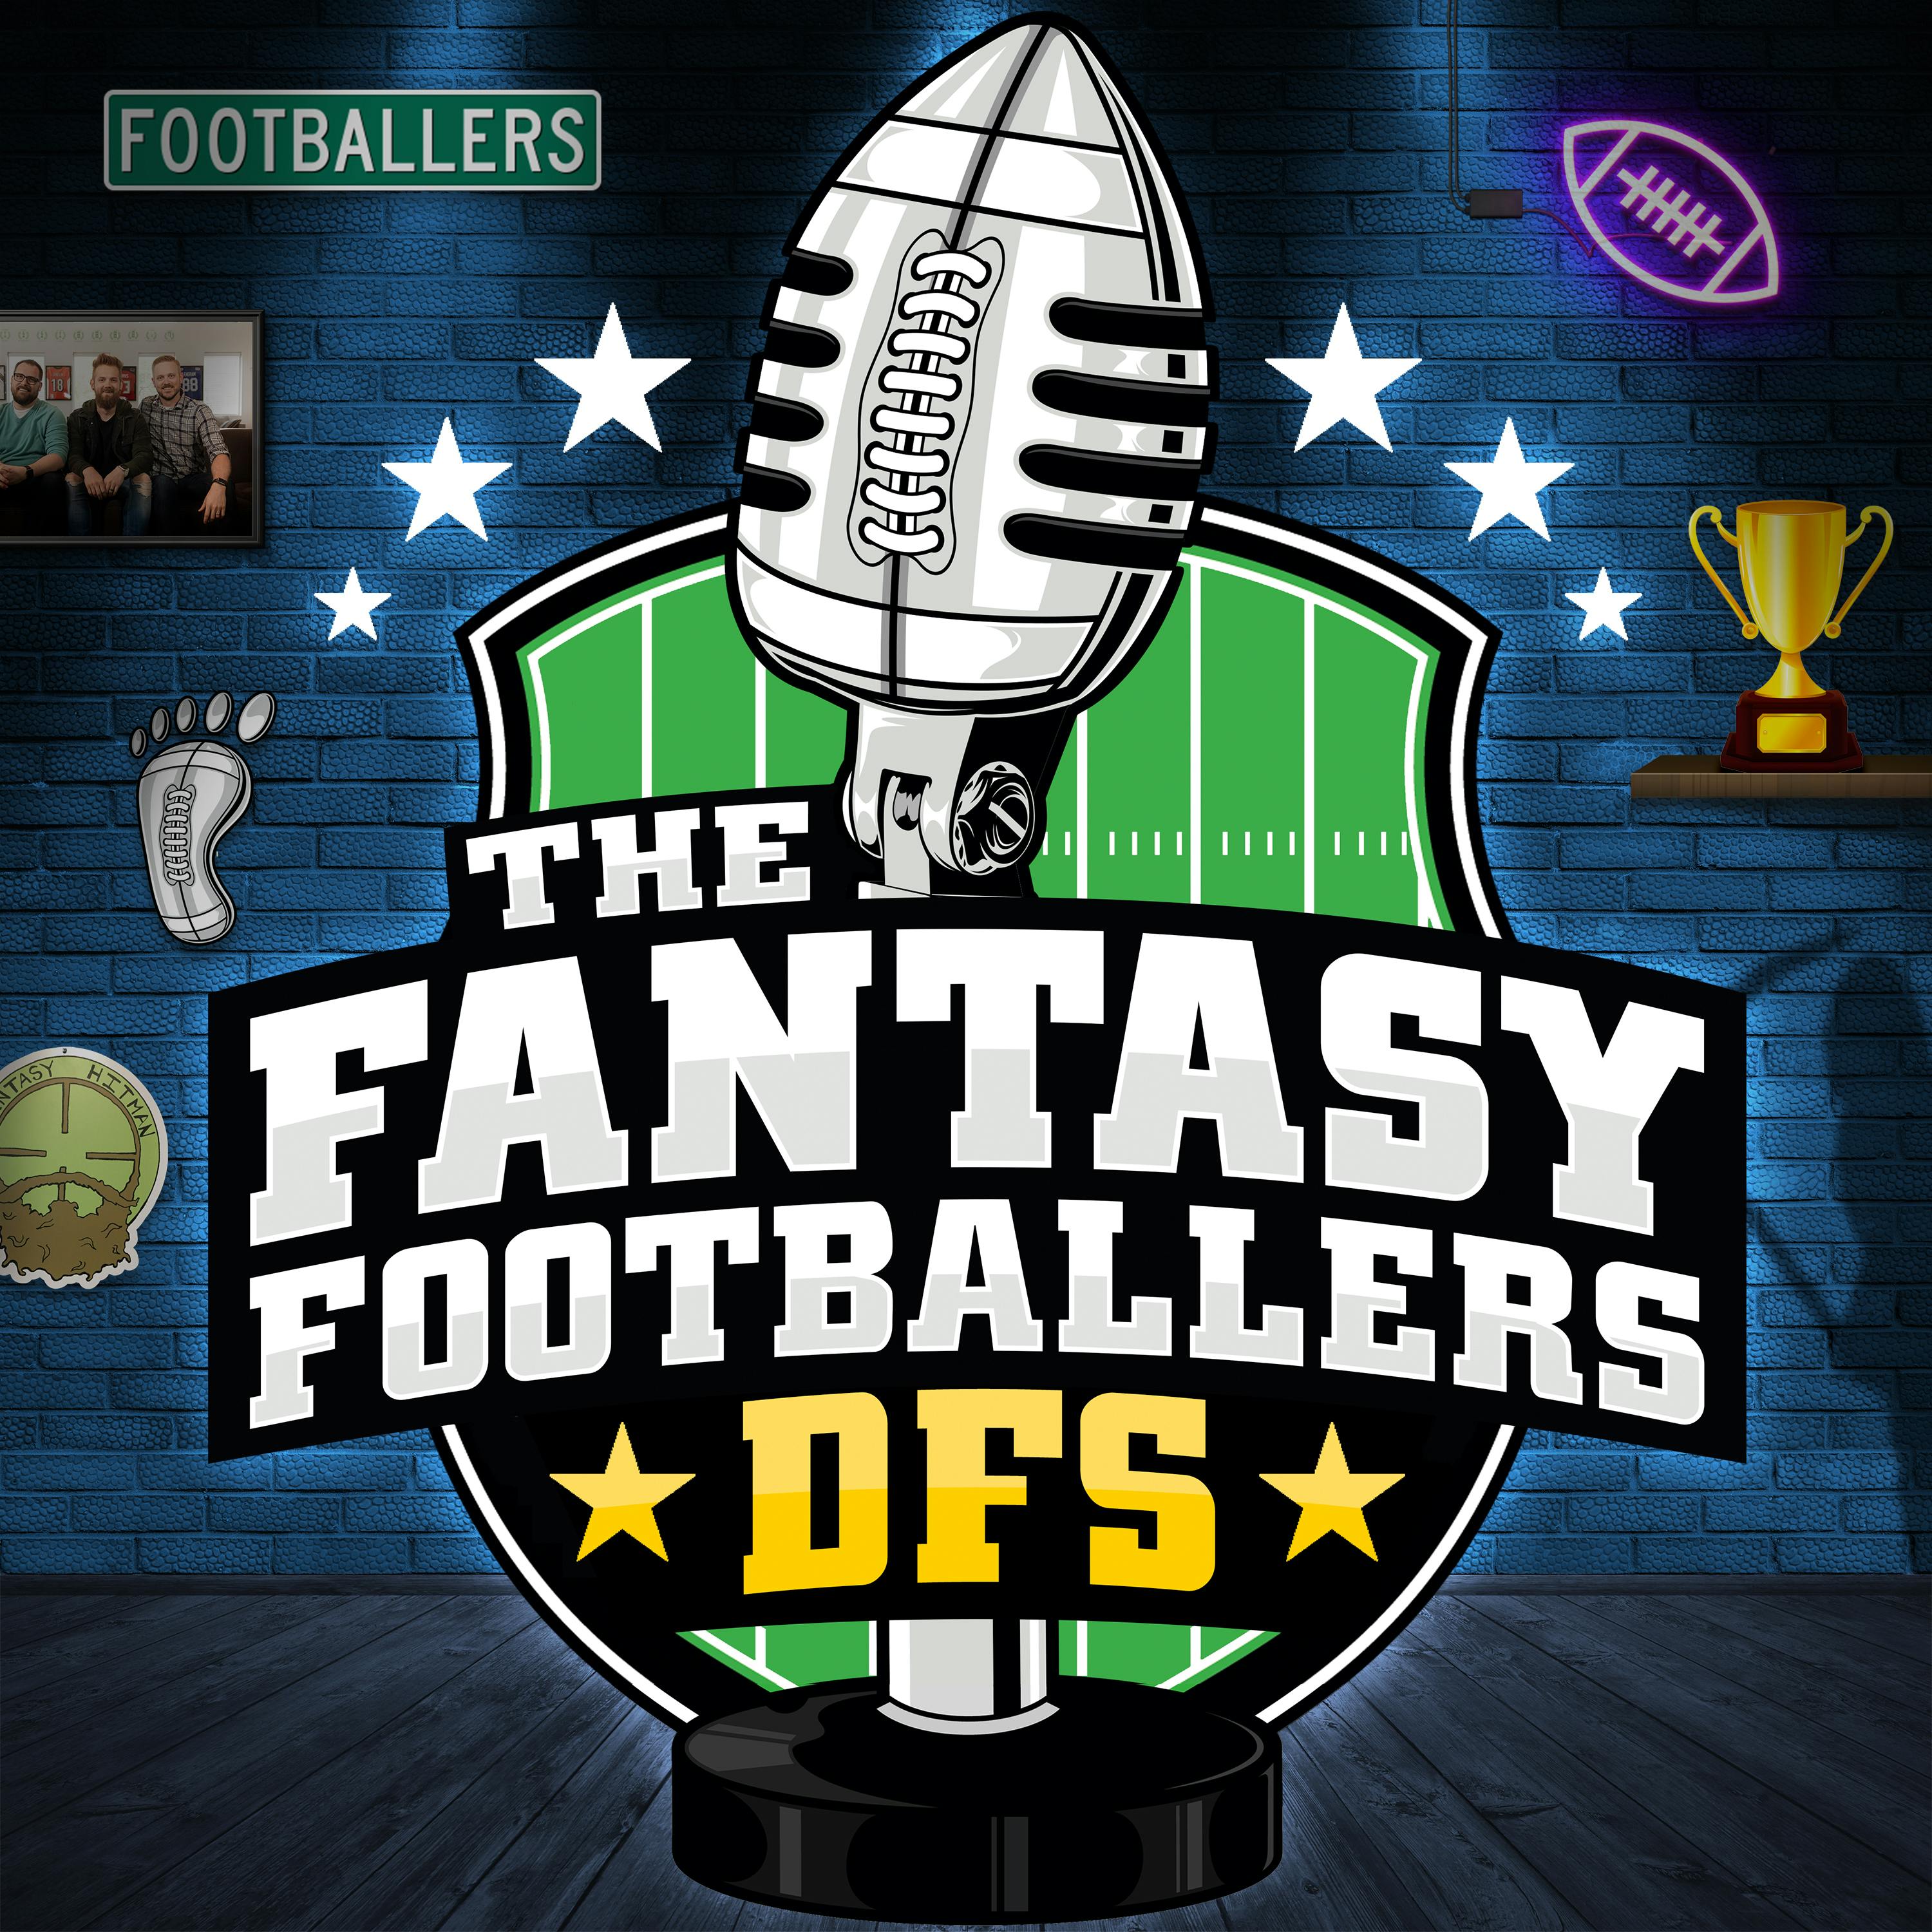 Week 11 DFS Preview + Big Announcements - Fantasy Football DFS